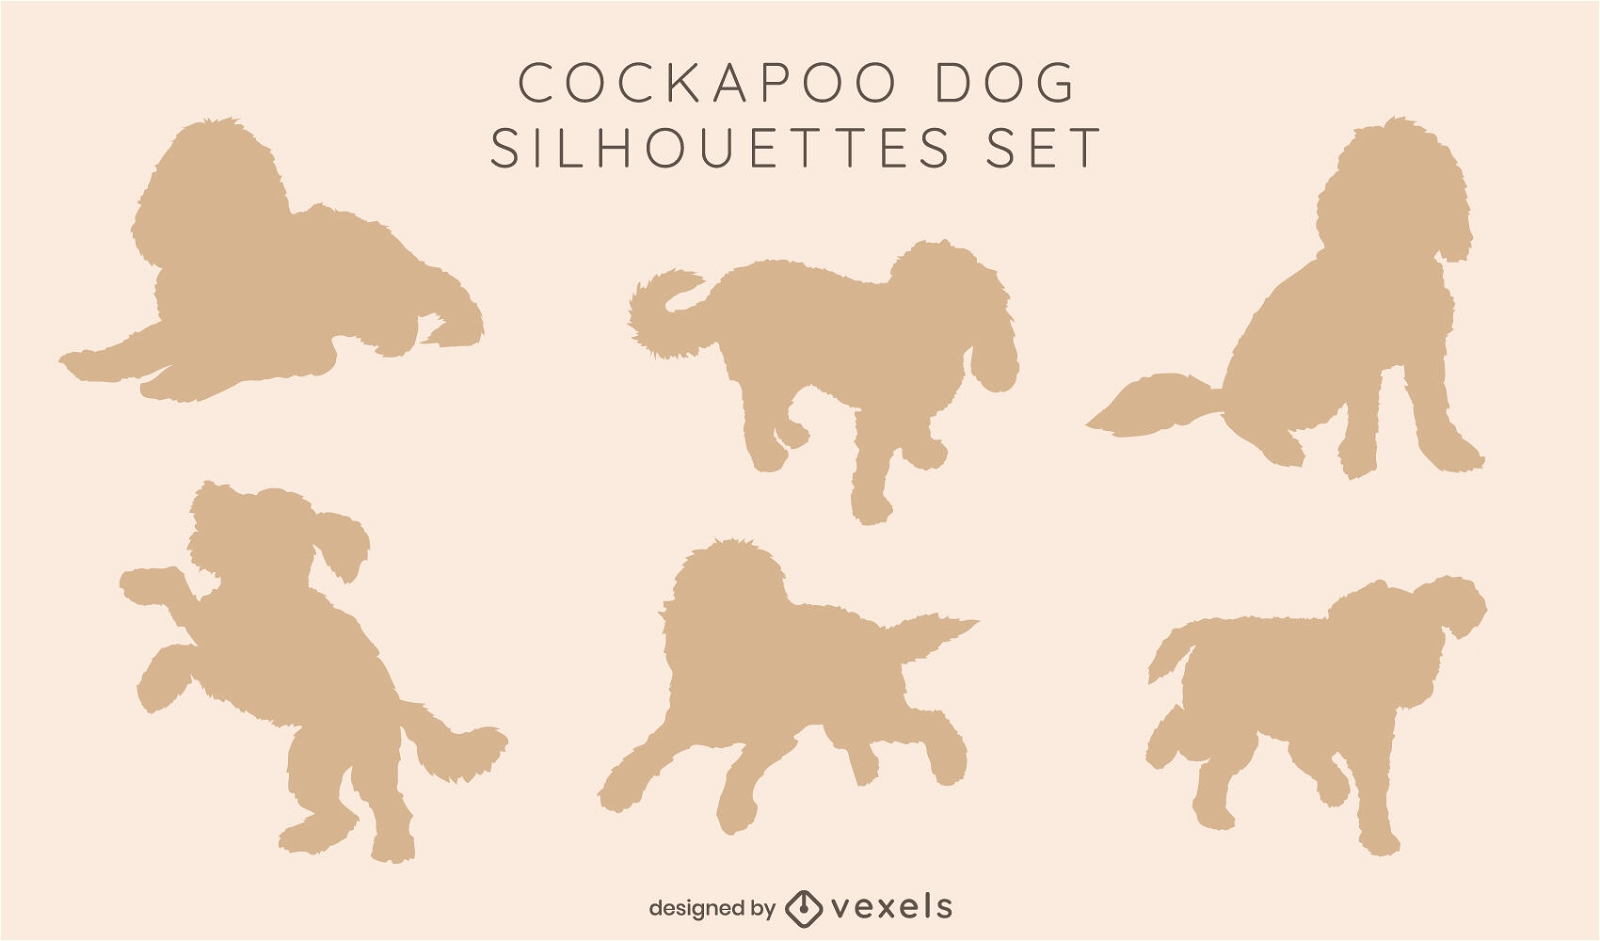 Cockapoo dog silhouette set